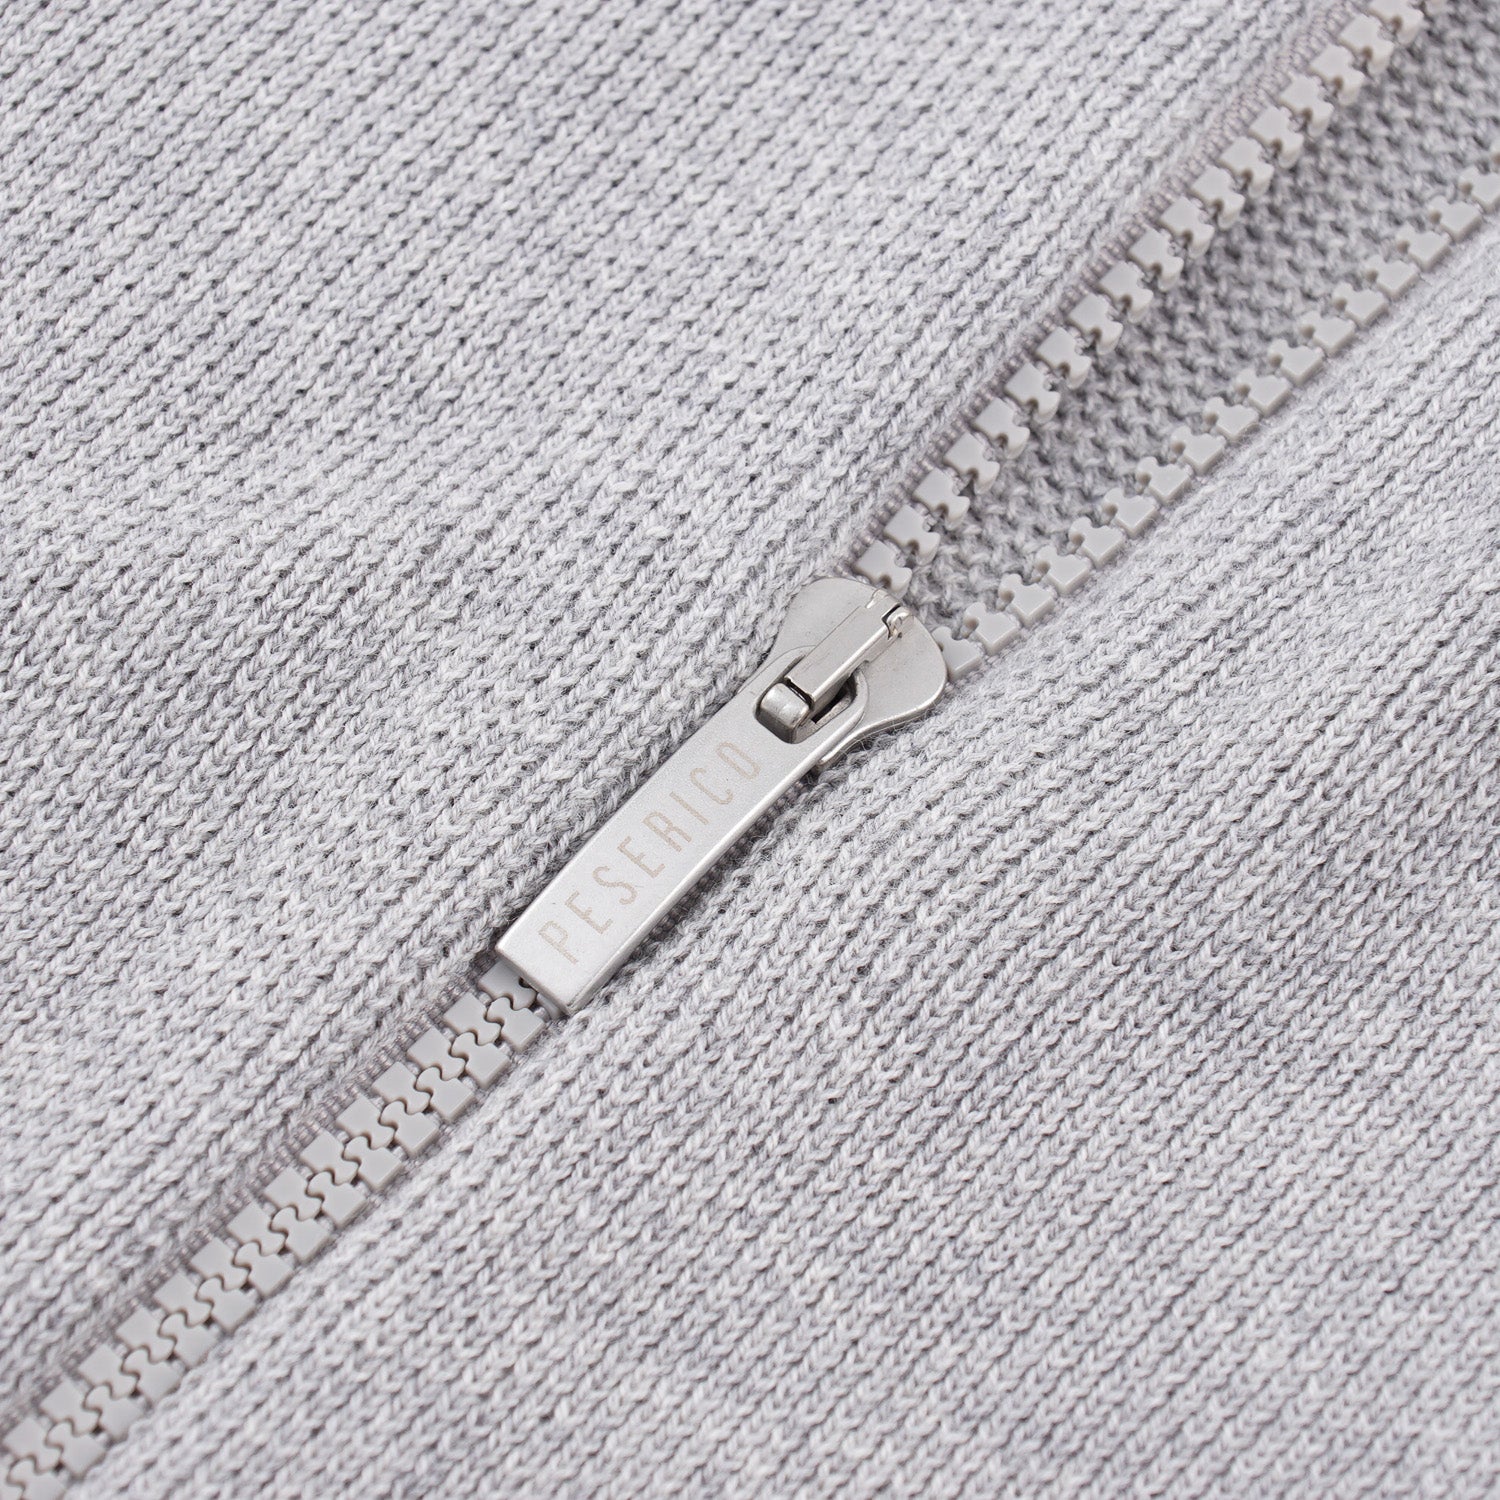 Peserico Knit Full-Zip Cardigan-Jacket - Top Shelf Apparel